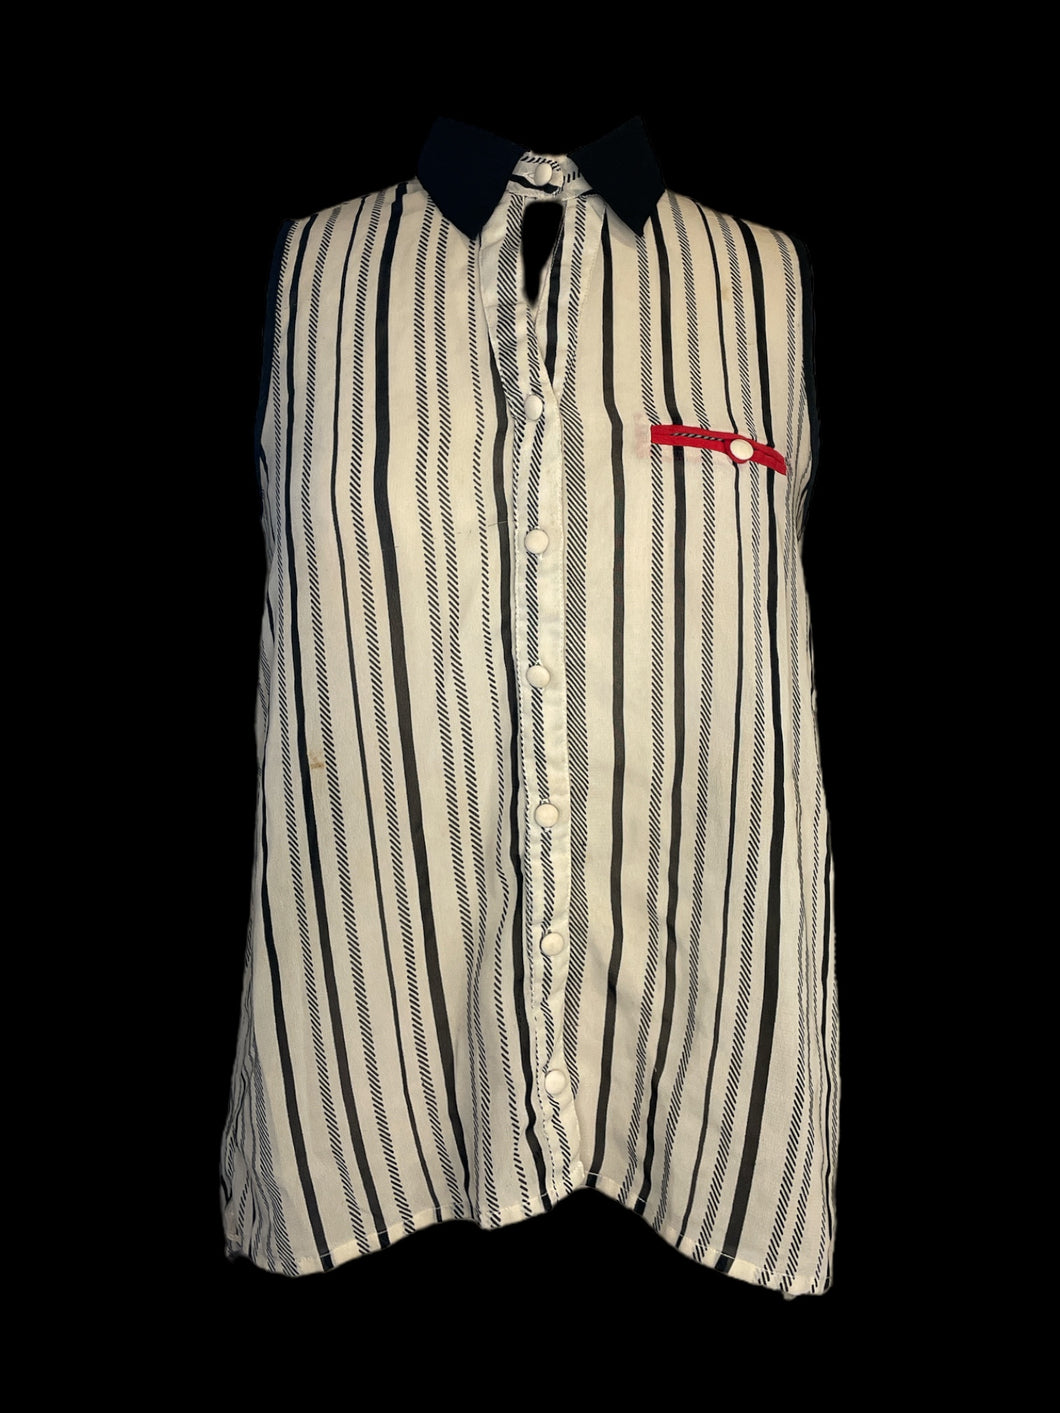 M Off-white & black stripe & hatch pattern sheer sleeveless button down hi-lo top w/ folded collar, faux pocket, & button keyhole closure